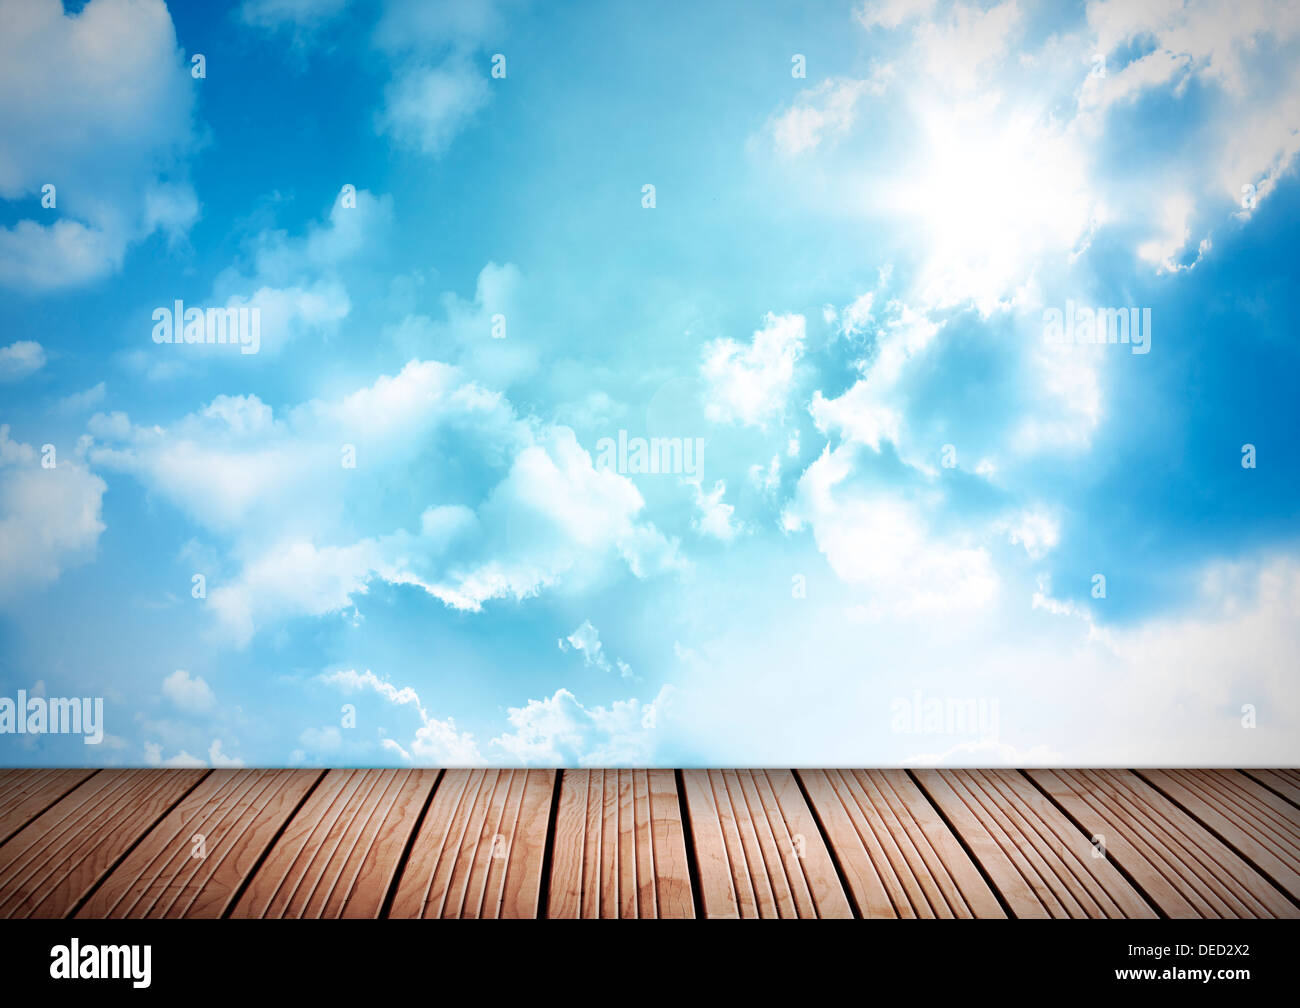 Decking in legno schede e cielo blu Foto Stock